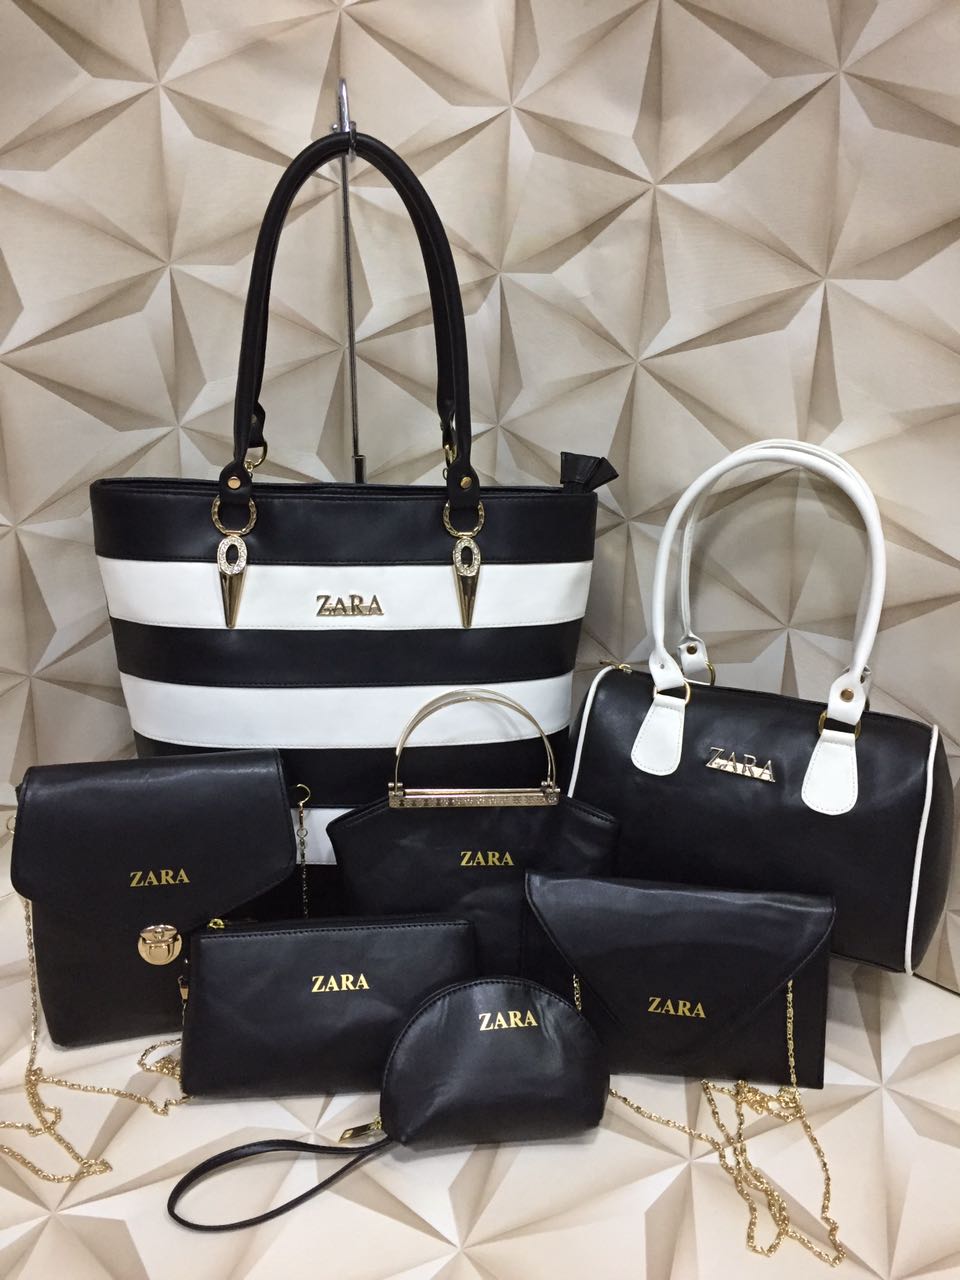 zara set of 7 bags